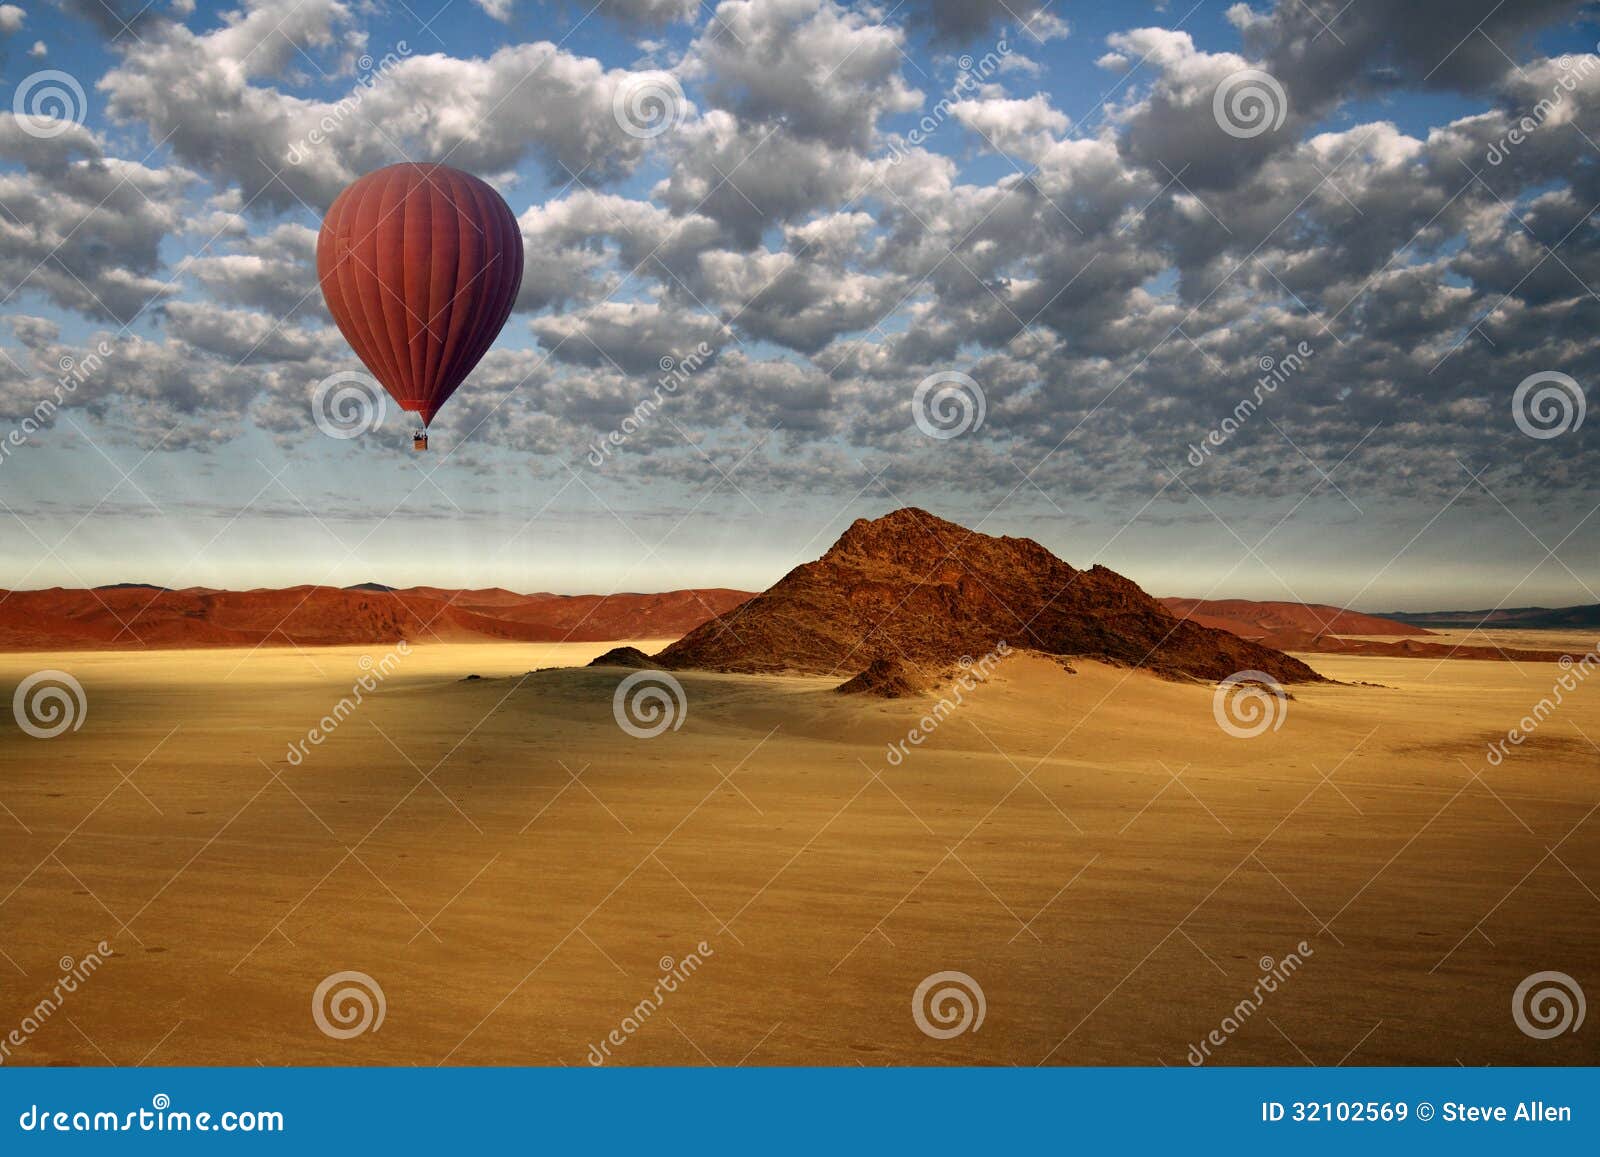 hot air balloon - sossusvlei - namibia